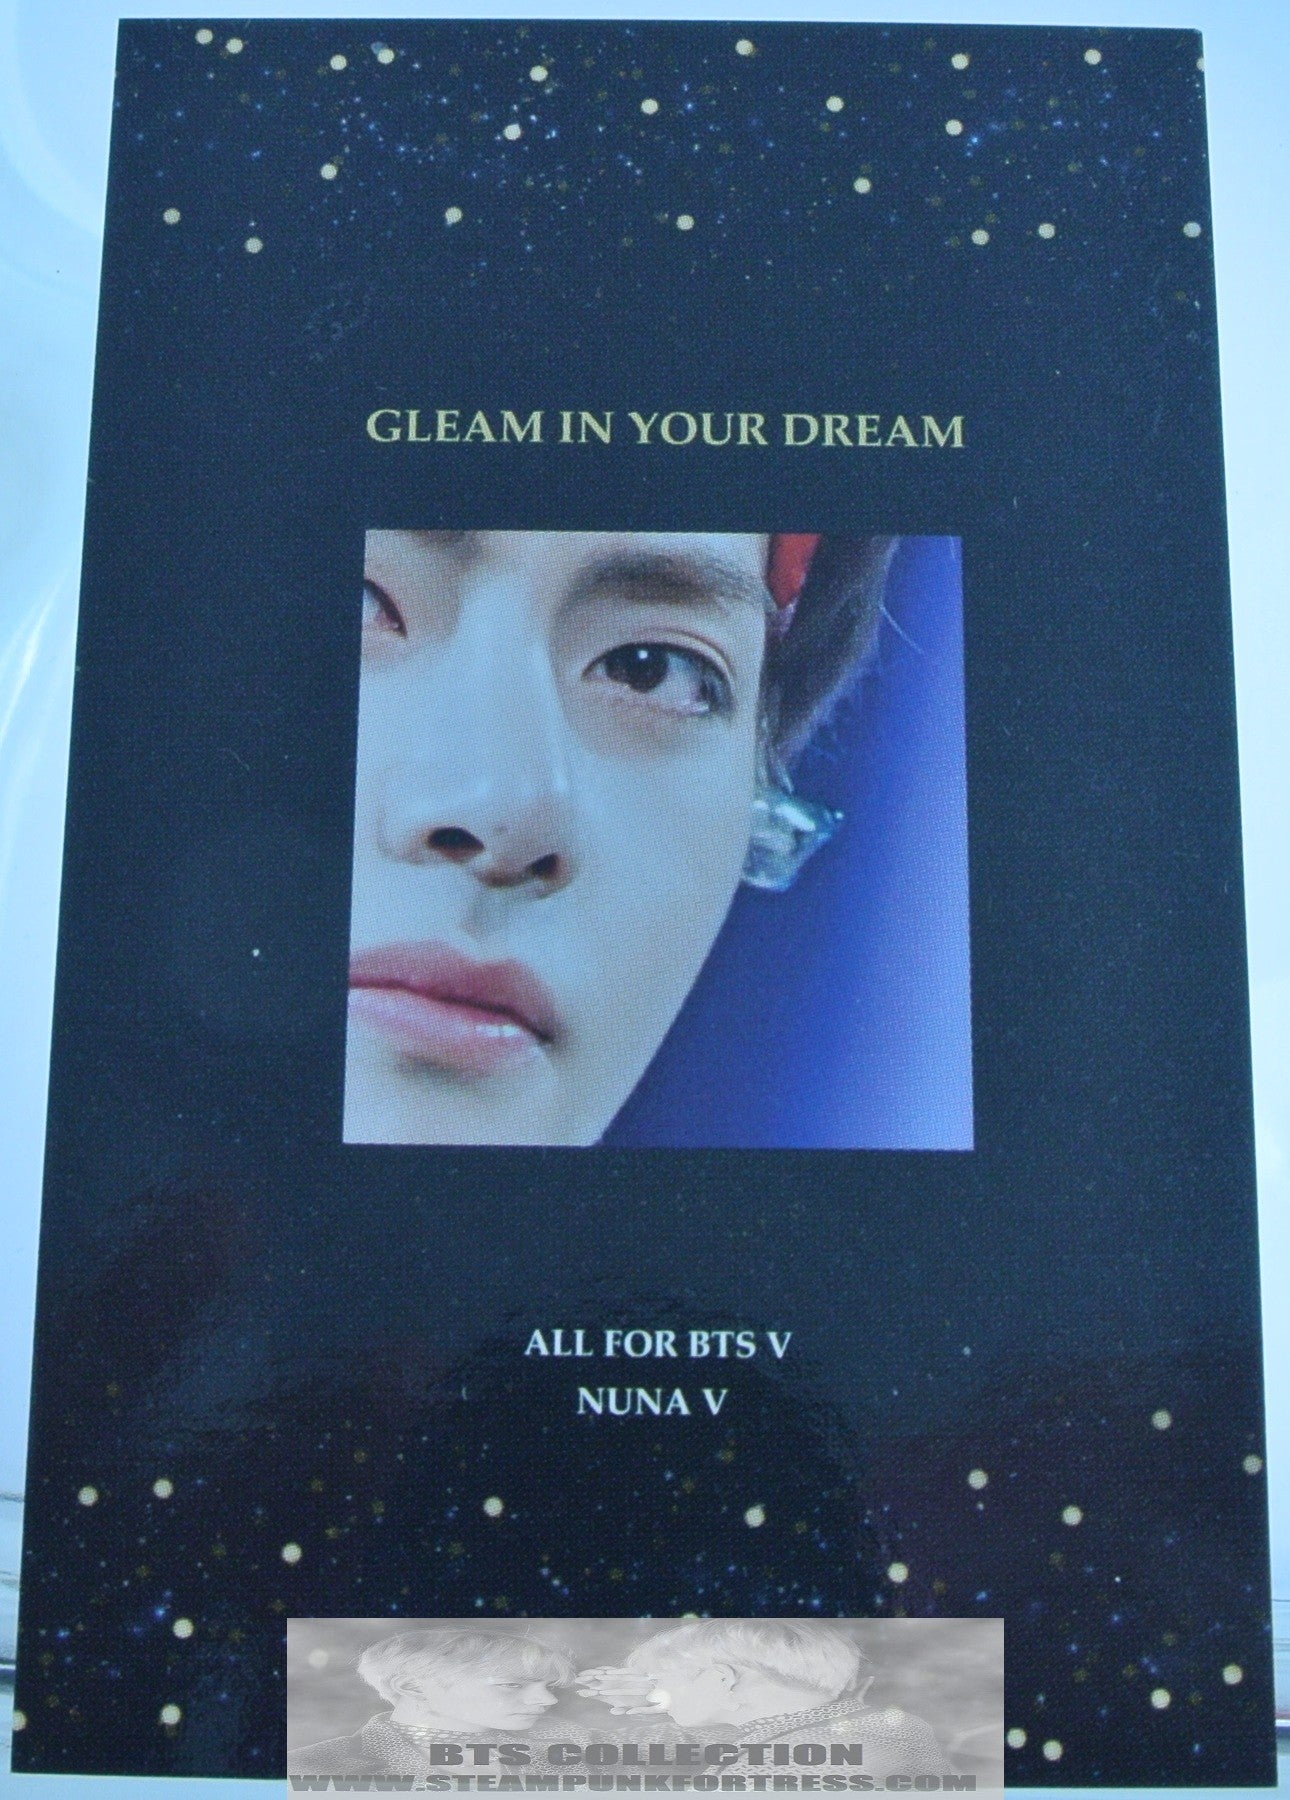 BTS V KIM TAEHYUNG FANSITE PHOTOCARD RED BANDANA GLEAM IN YOUR DREAM NUNA V PHOTO CARD